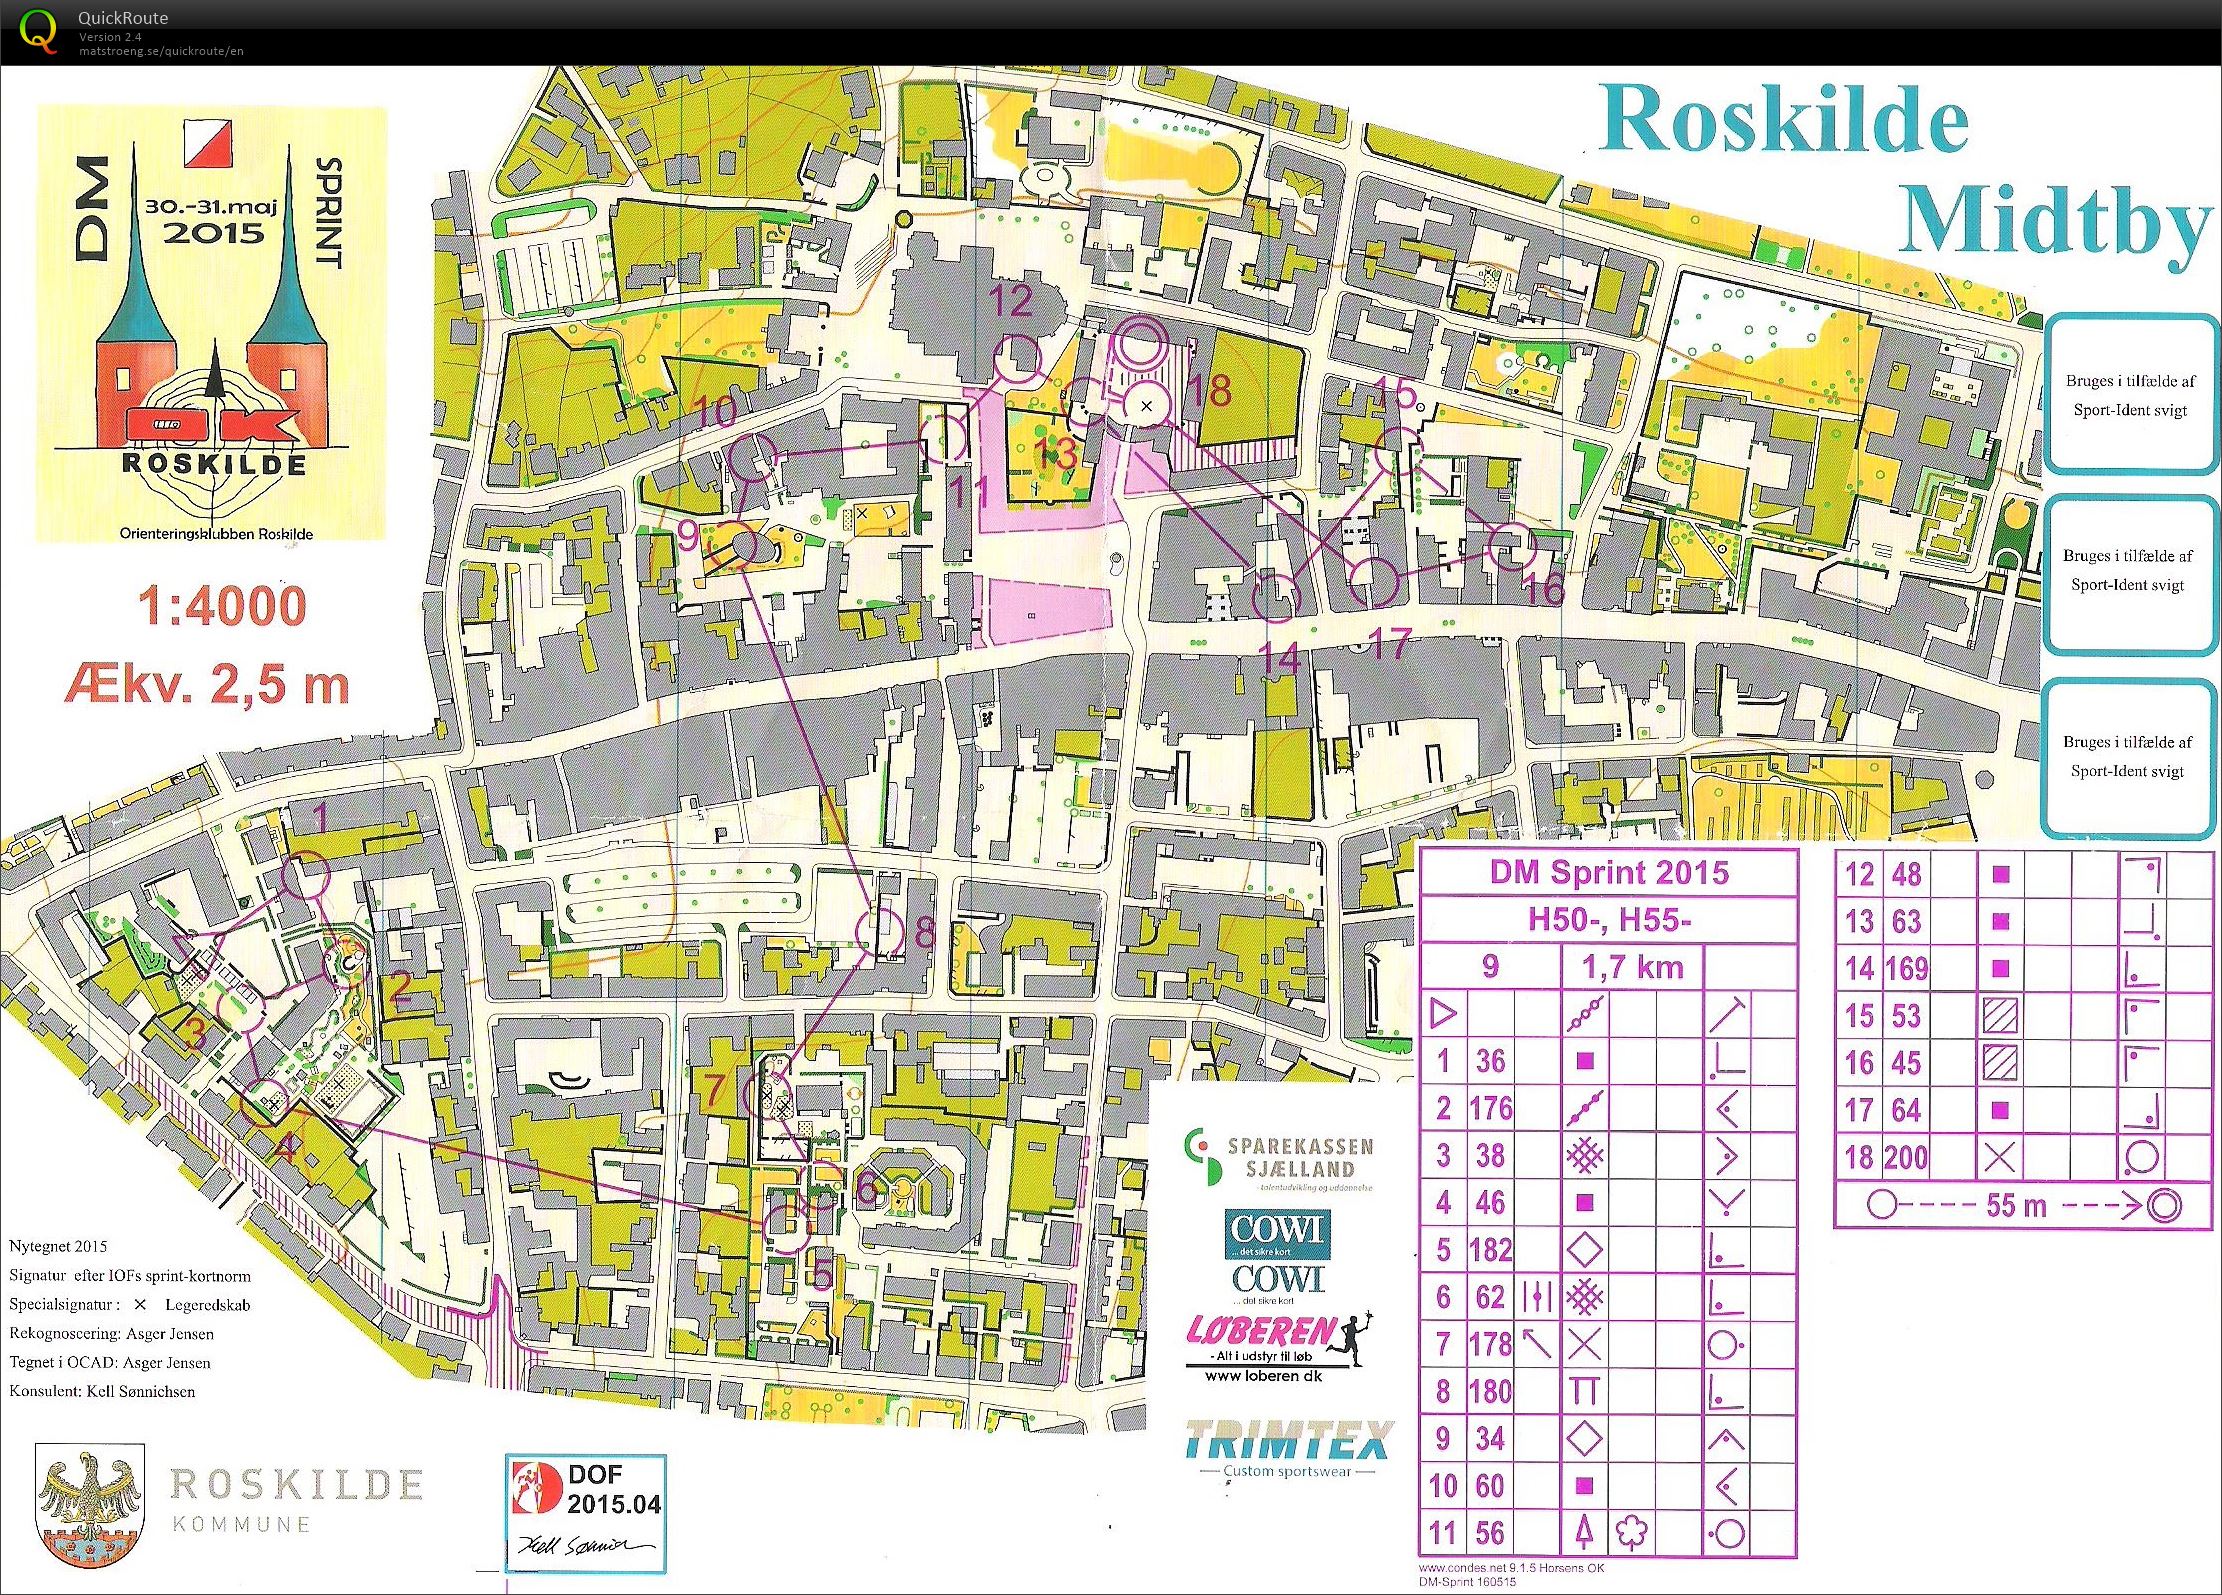 DM Sprint Roskilde Midtby H55 (2015-05-30)